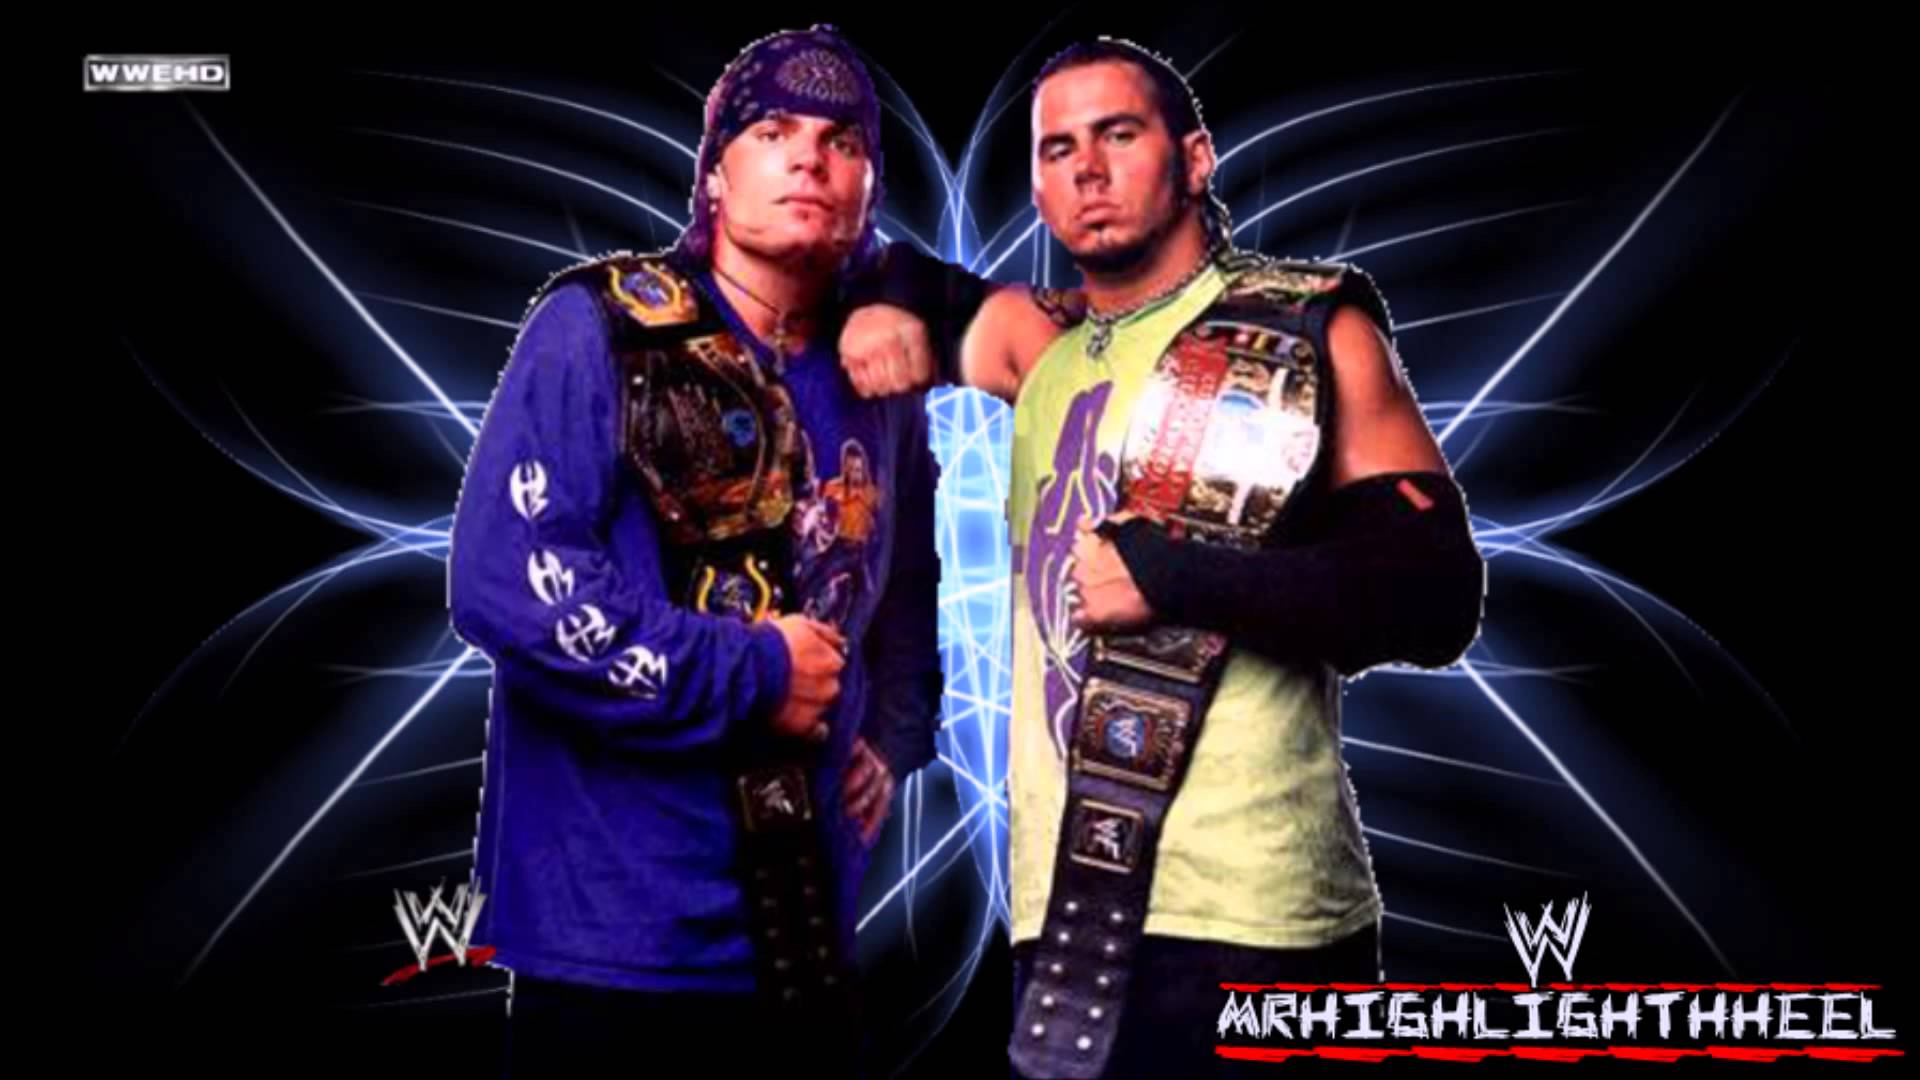 Reupload 1998/2009: The Hardy Boyz 3rd WWE Theme Song - "Loaded.